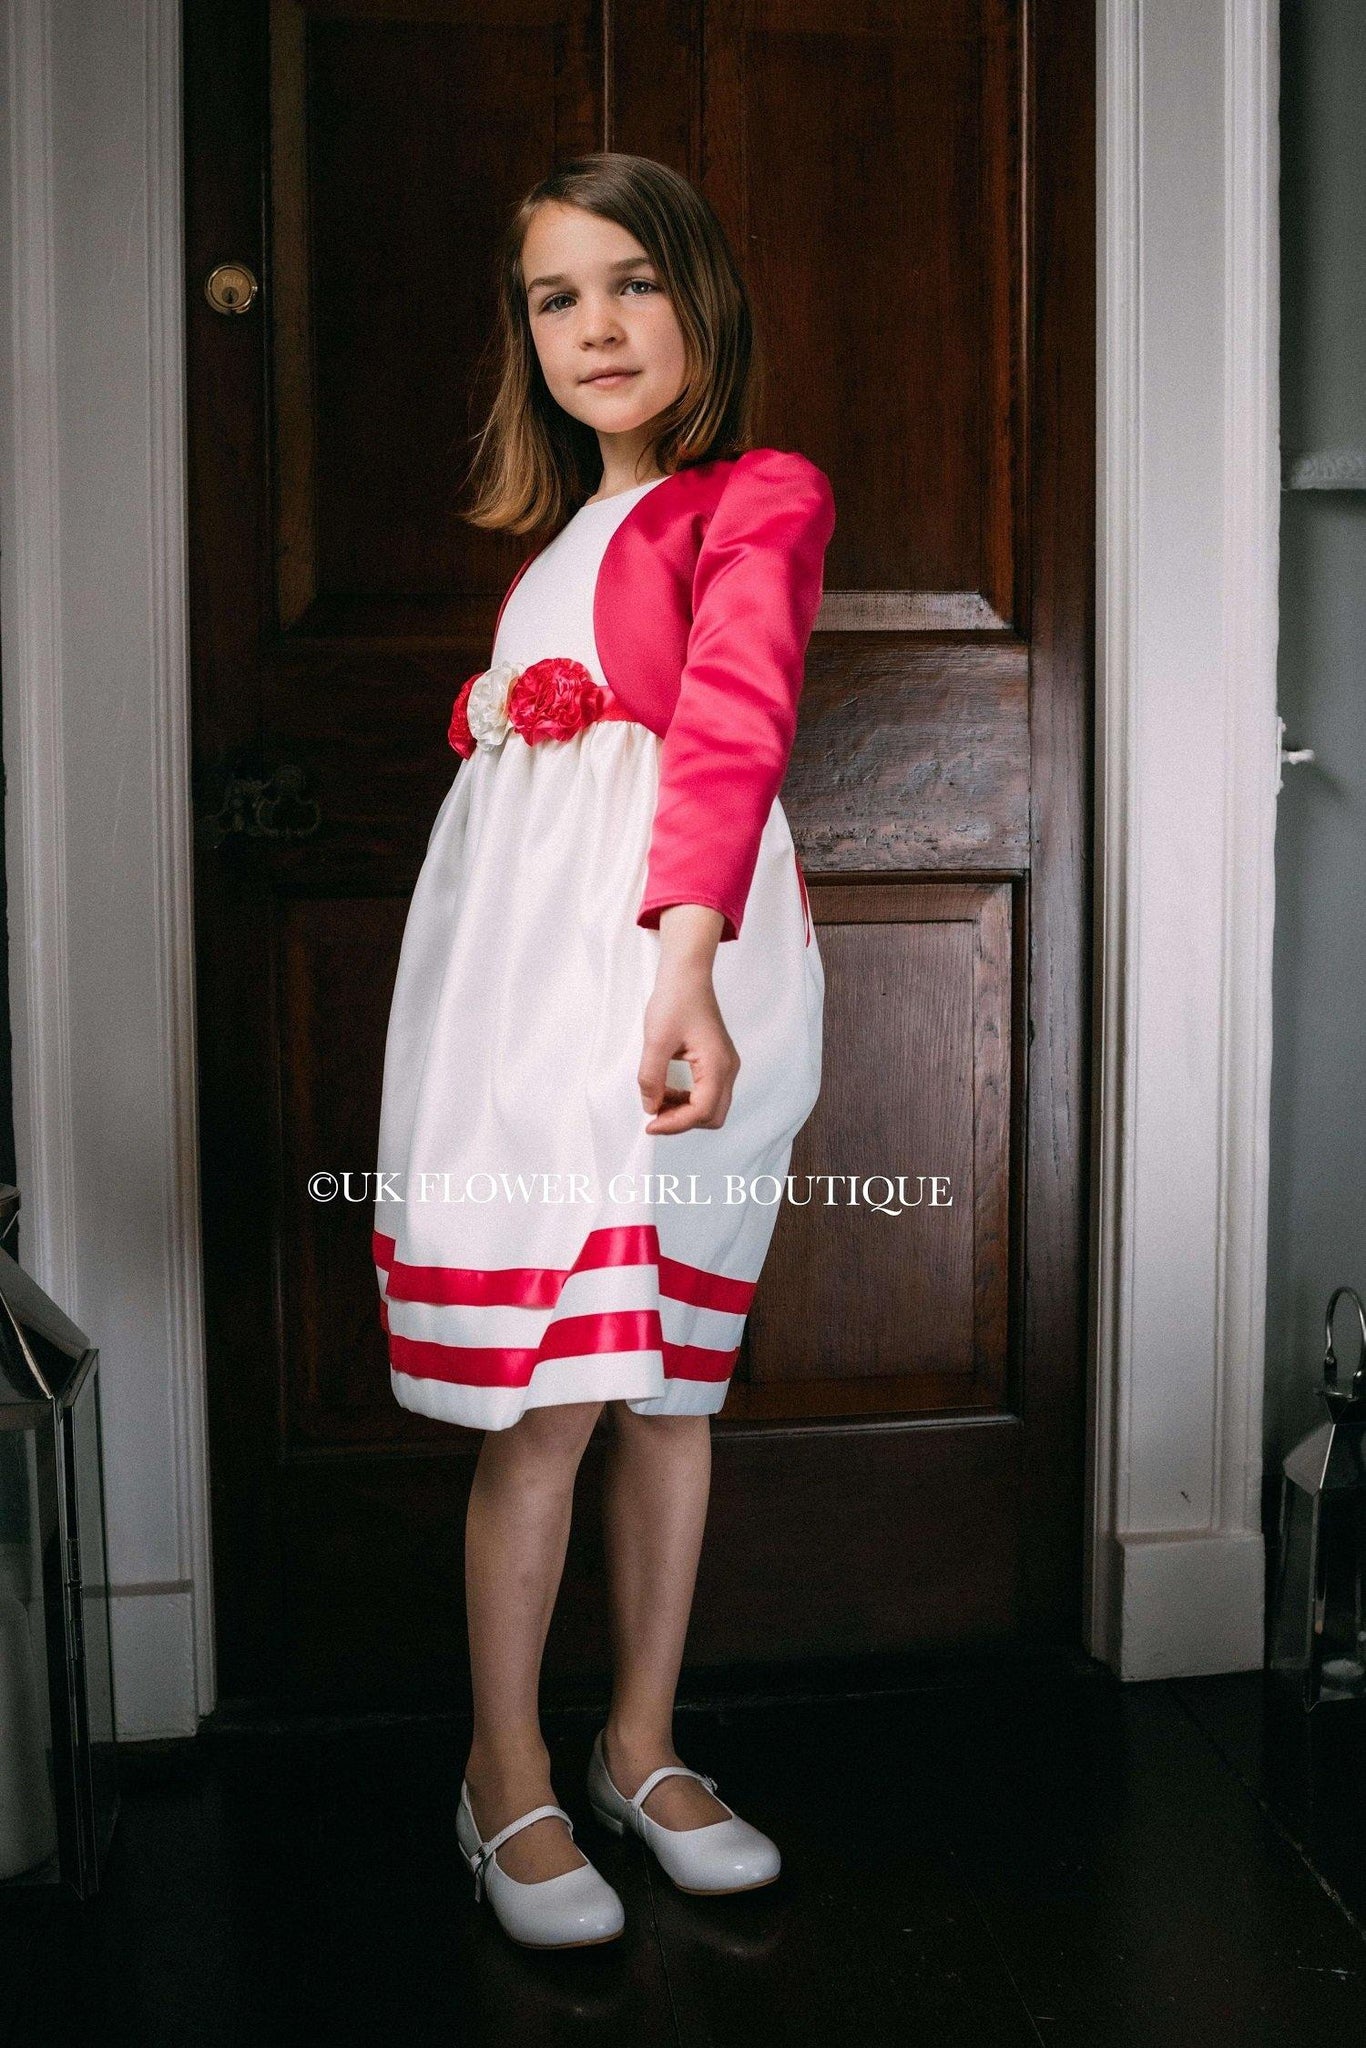 Young girl holding dress wearing matching bolero